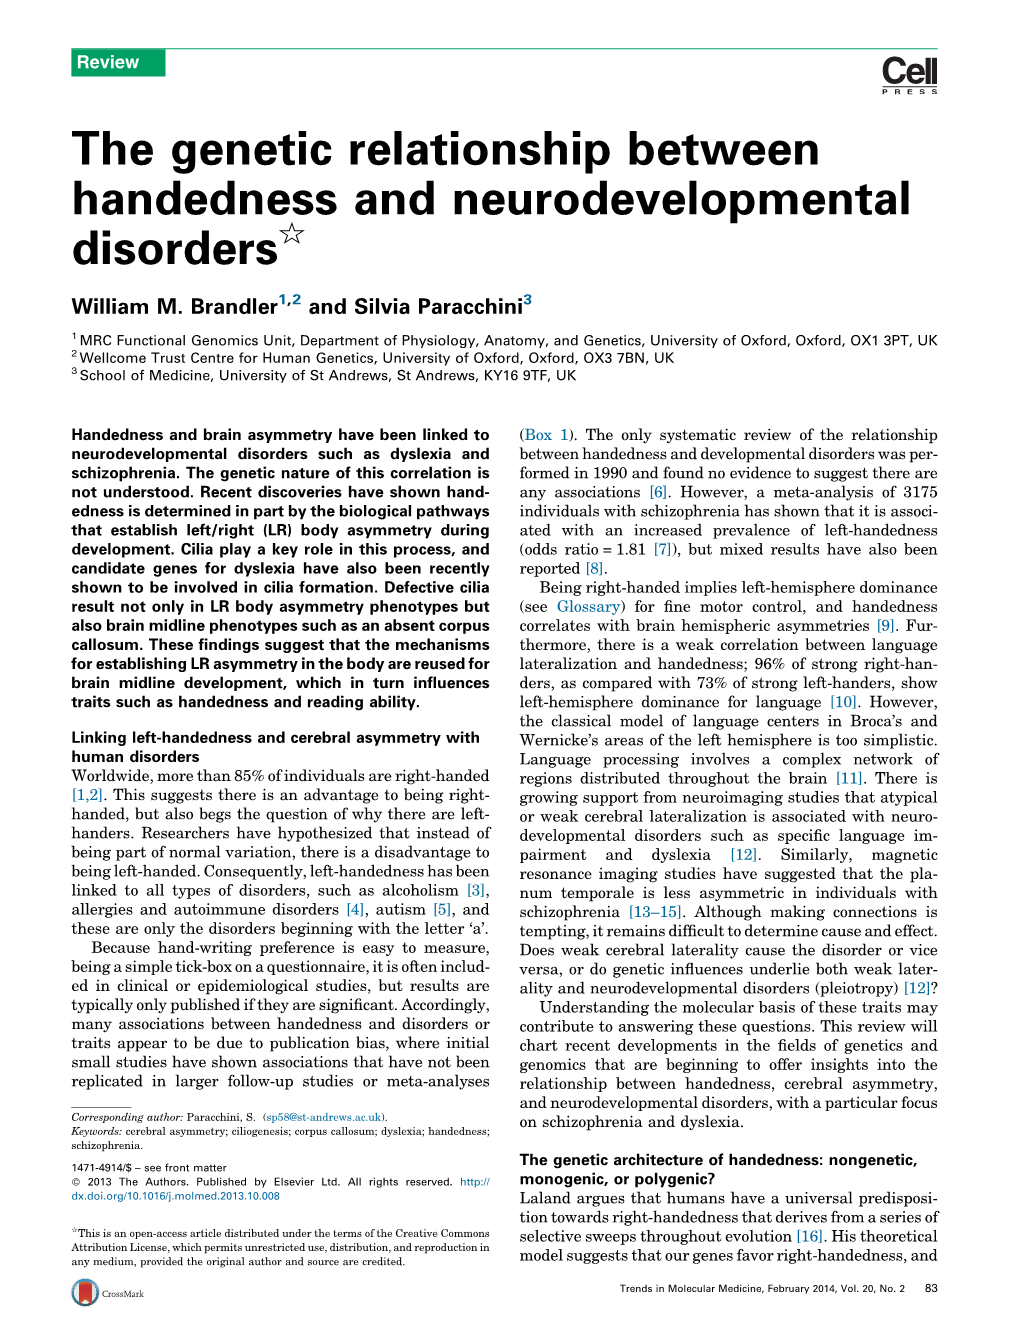 The Genetic Relationship Between Handedness and Neurodevelopmental Disorders§